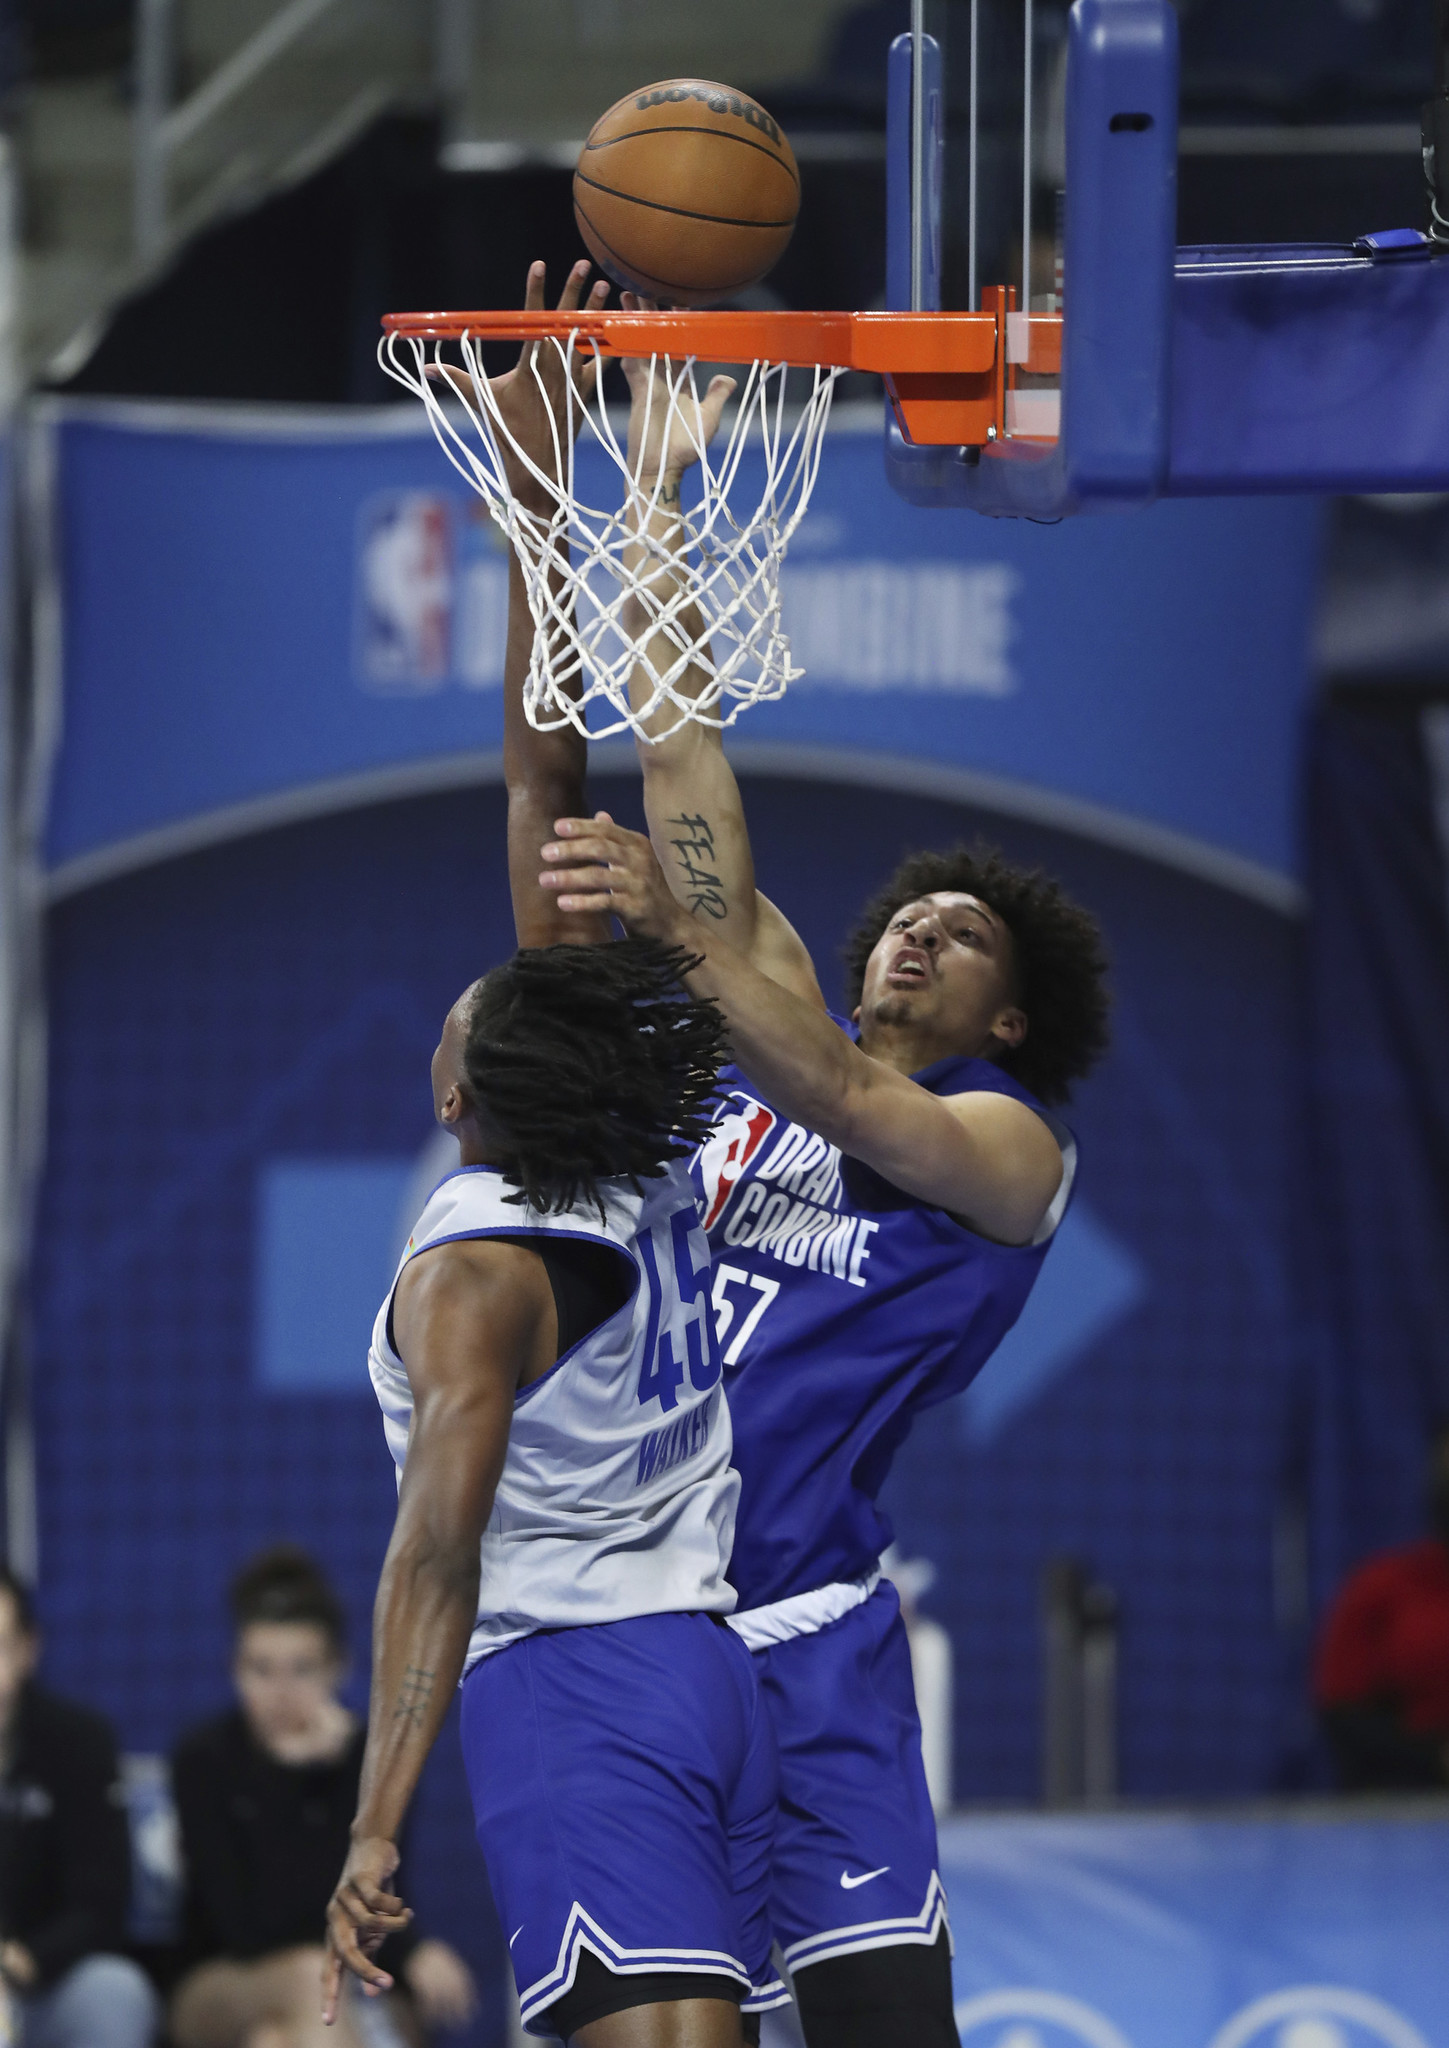 Photos: NBA draft combine in Chicago